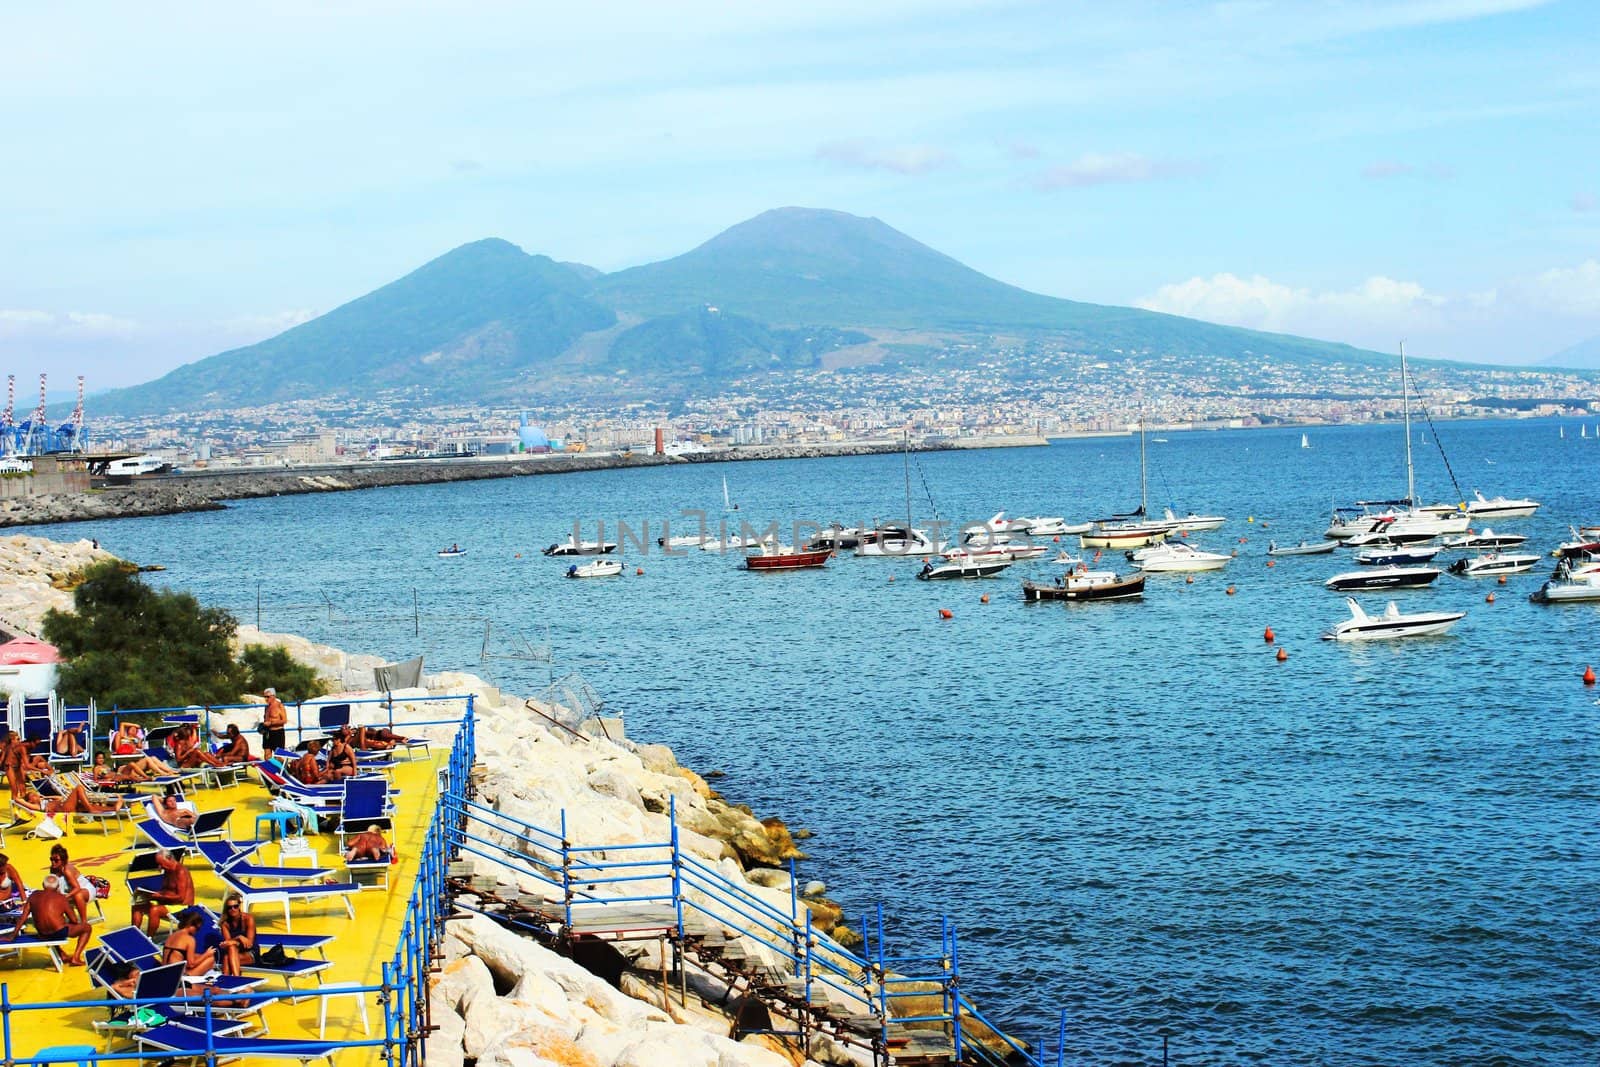 Landscape of Mount Vesuvius, the sea of Naples